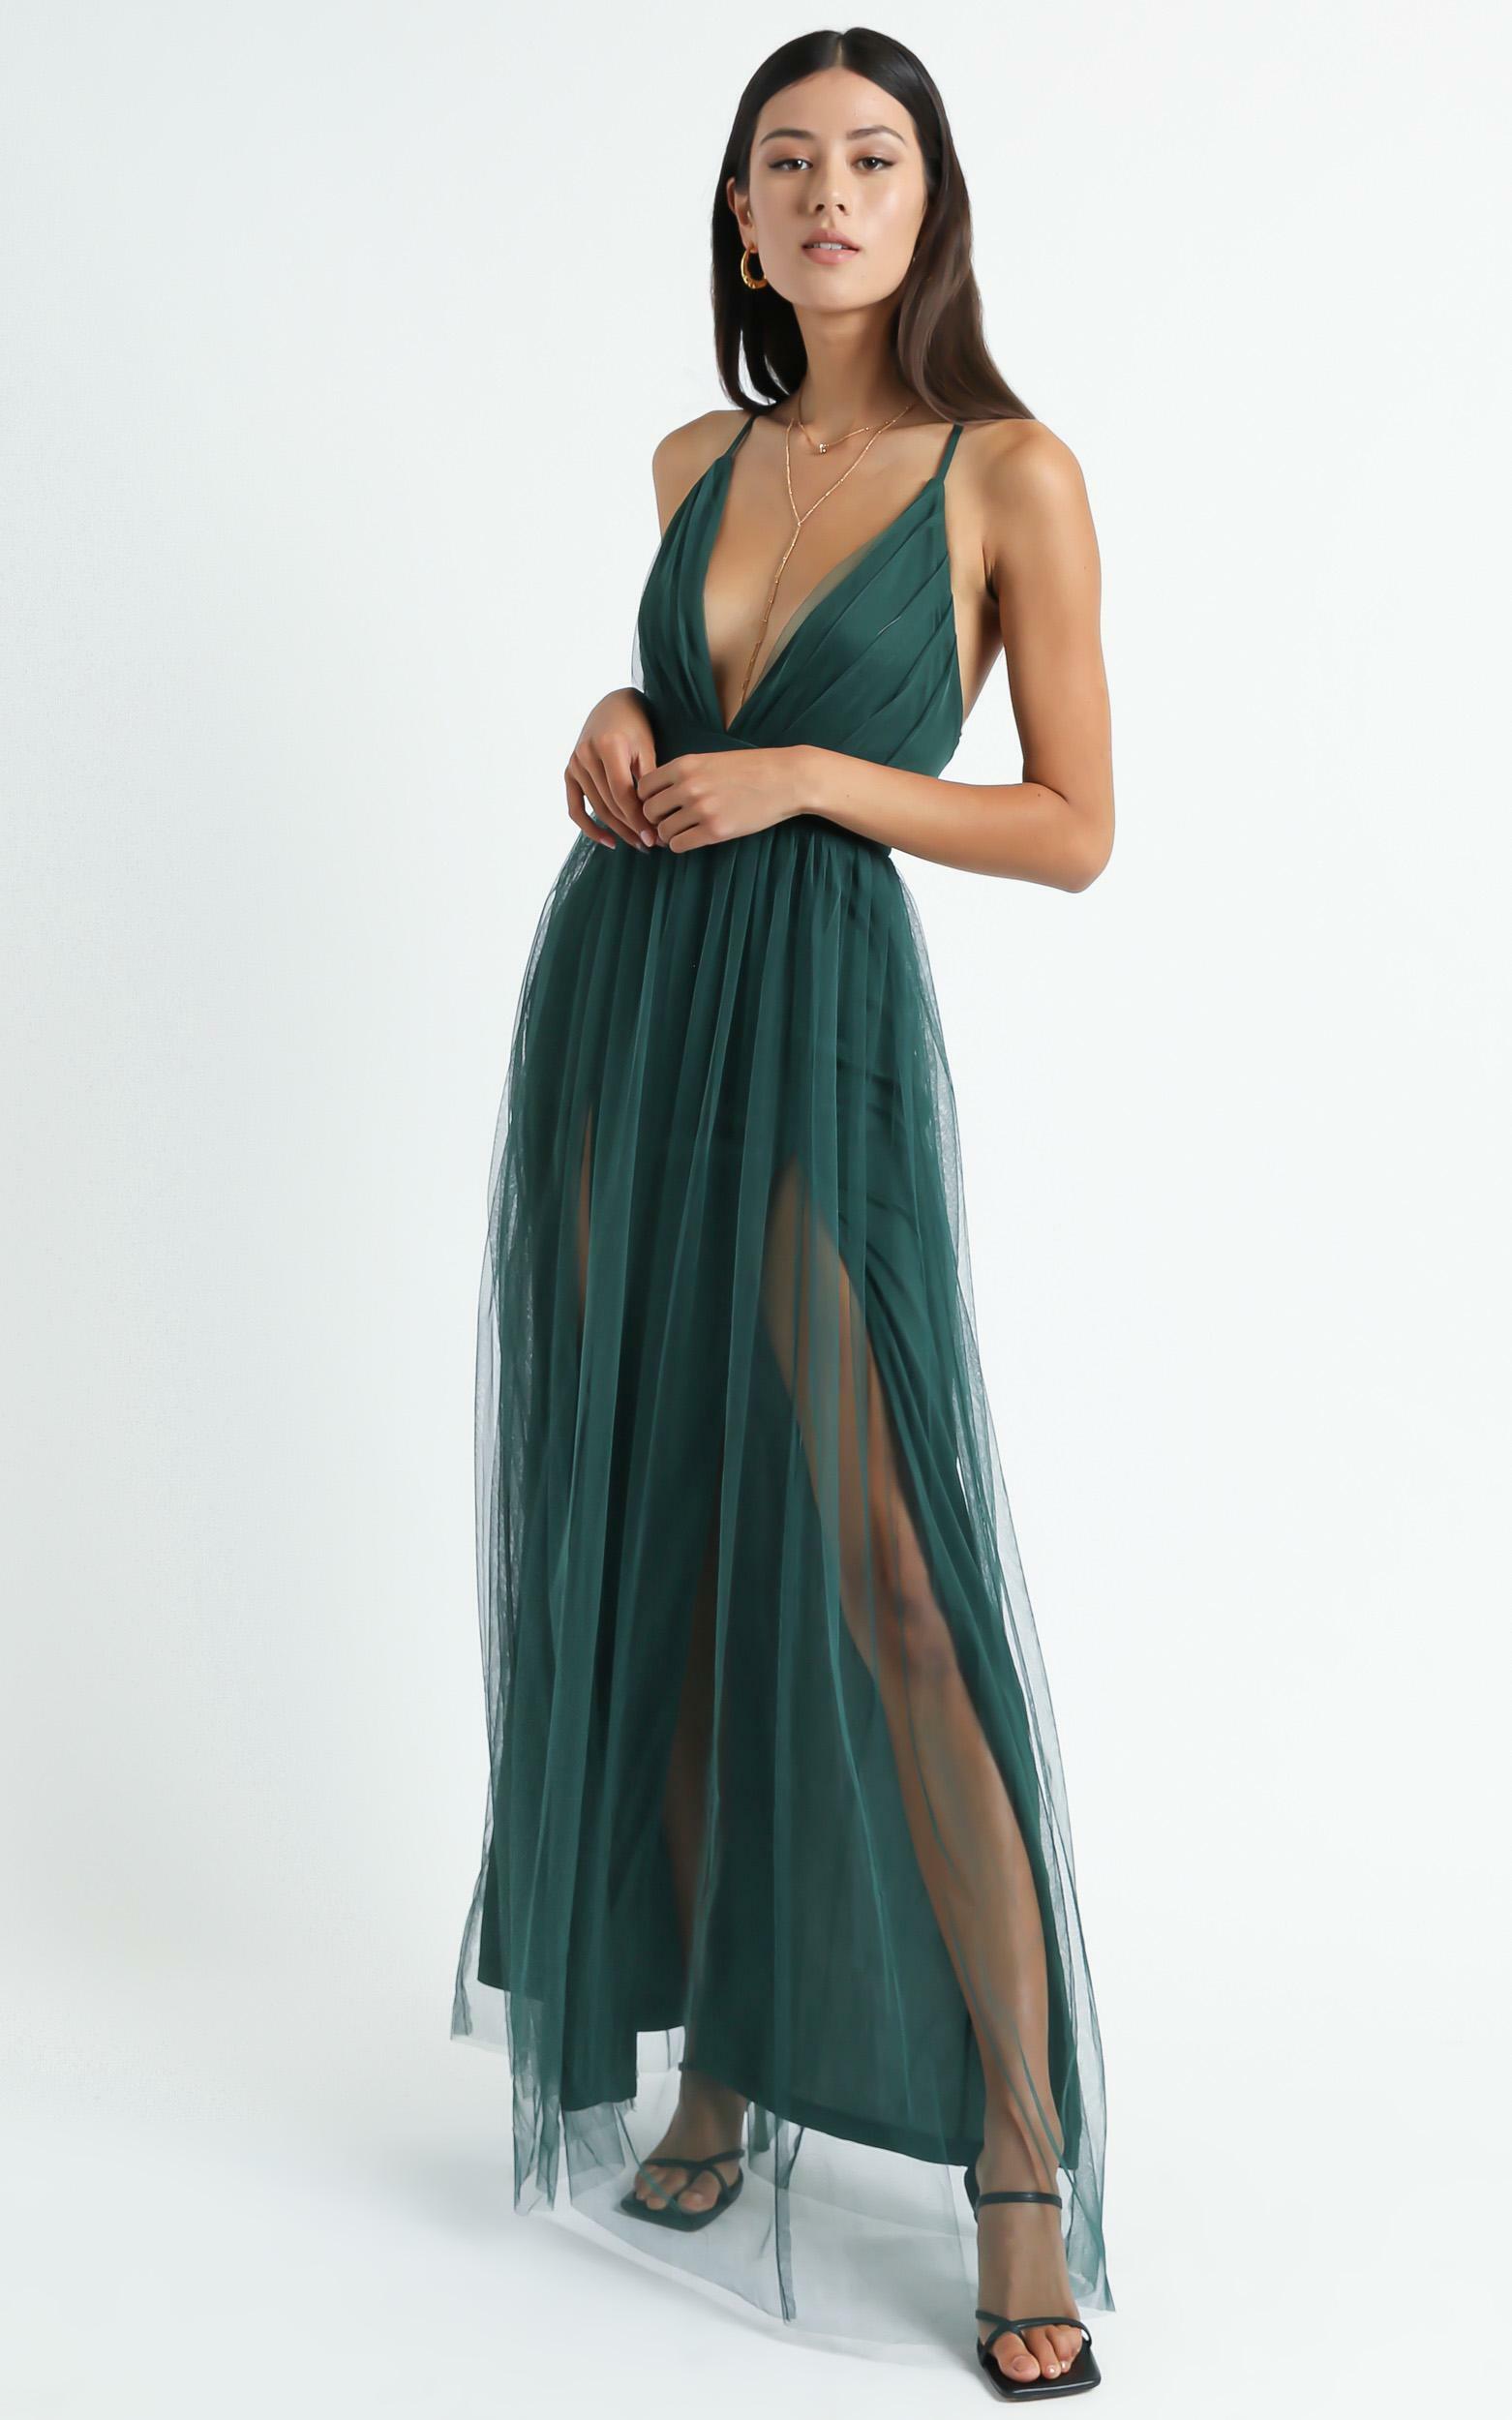 Details about   Emerald Jewel Dress